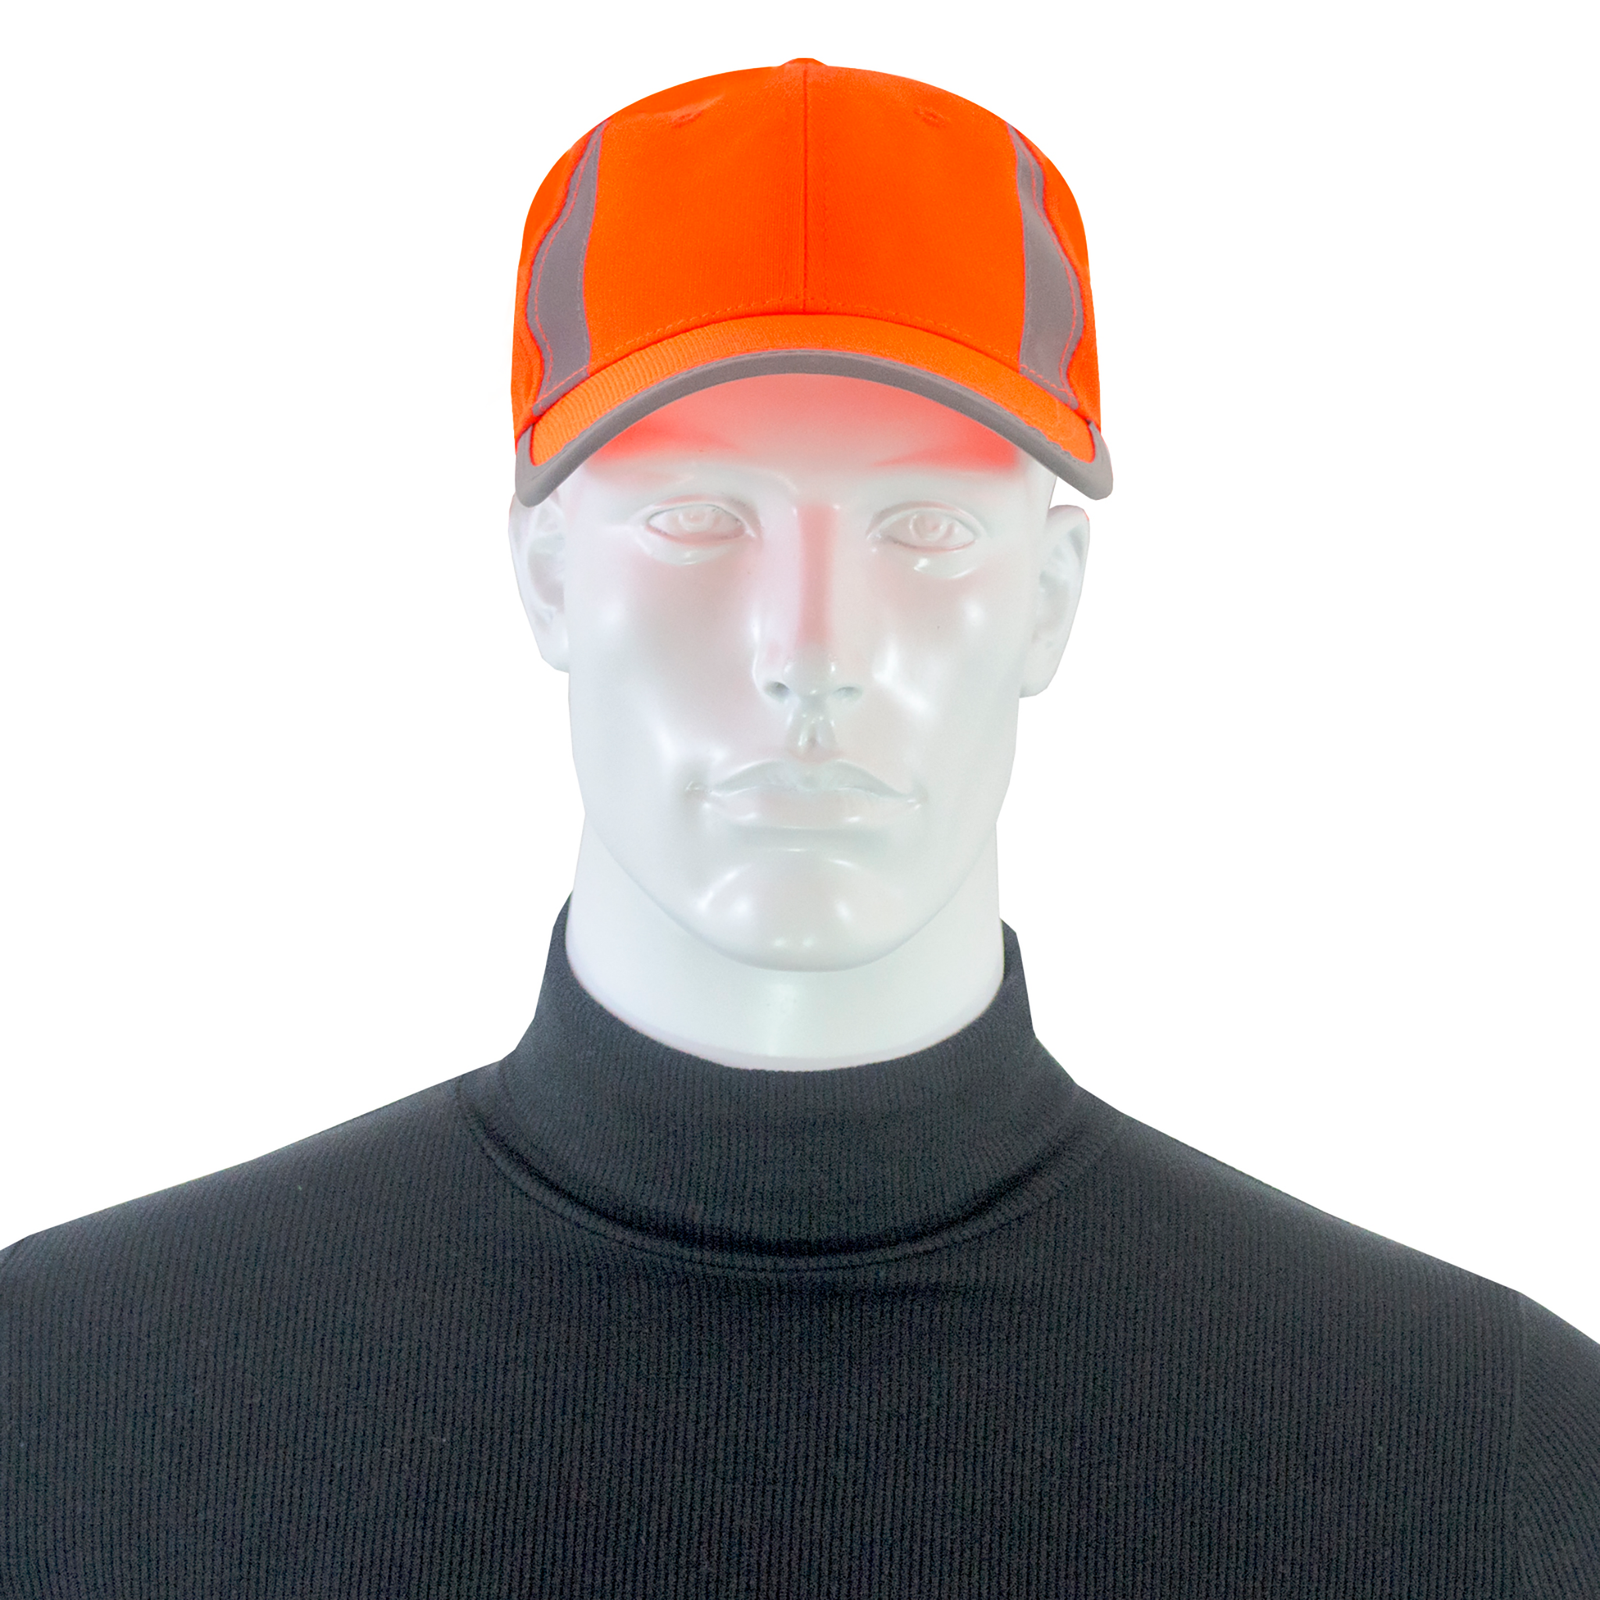 A mannequin wearing a hi-vis orange cap with reflective stripes